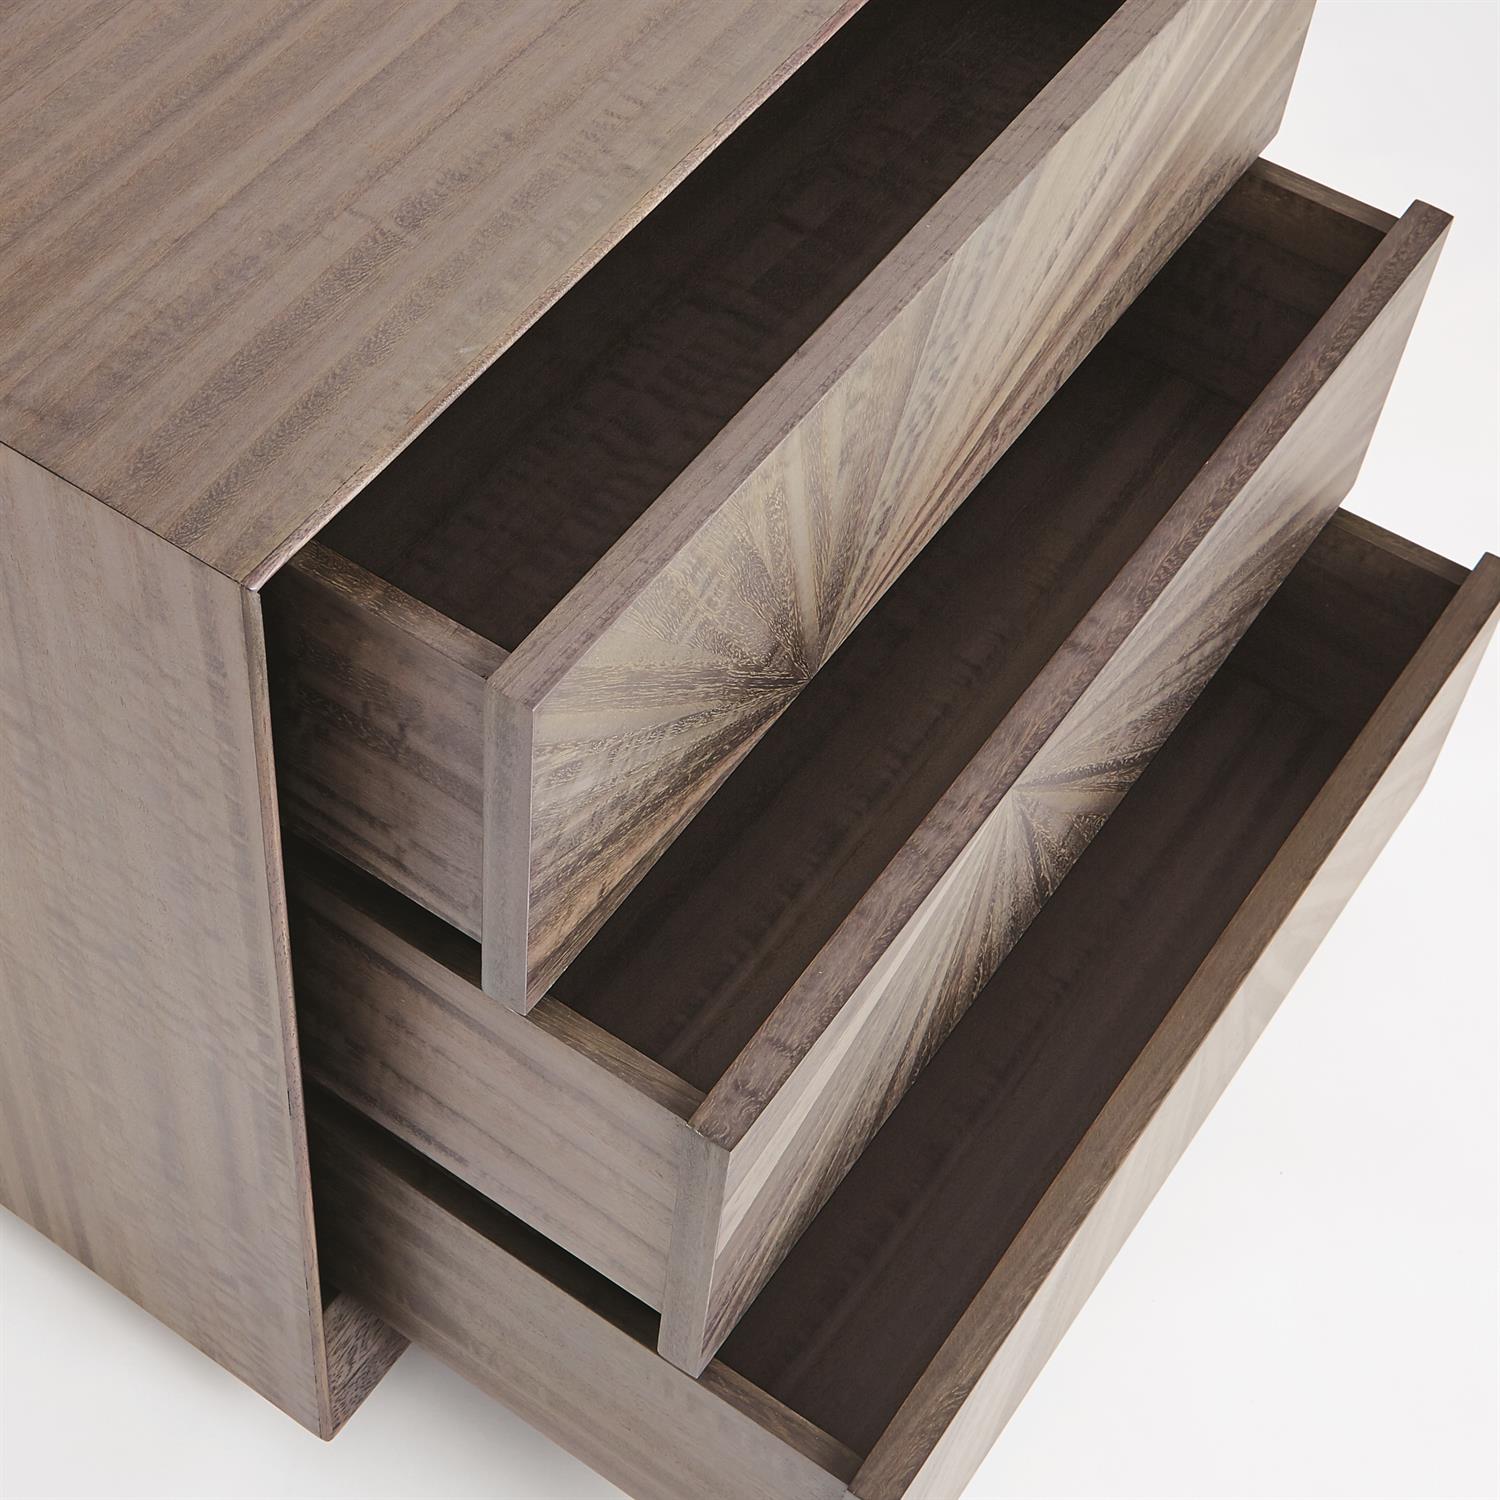 Eucalyptus Burst Bedside Chest - Left - Grats Decor Interior Design & Build Inc.